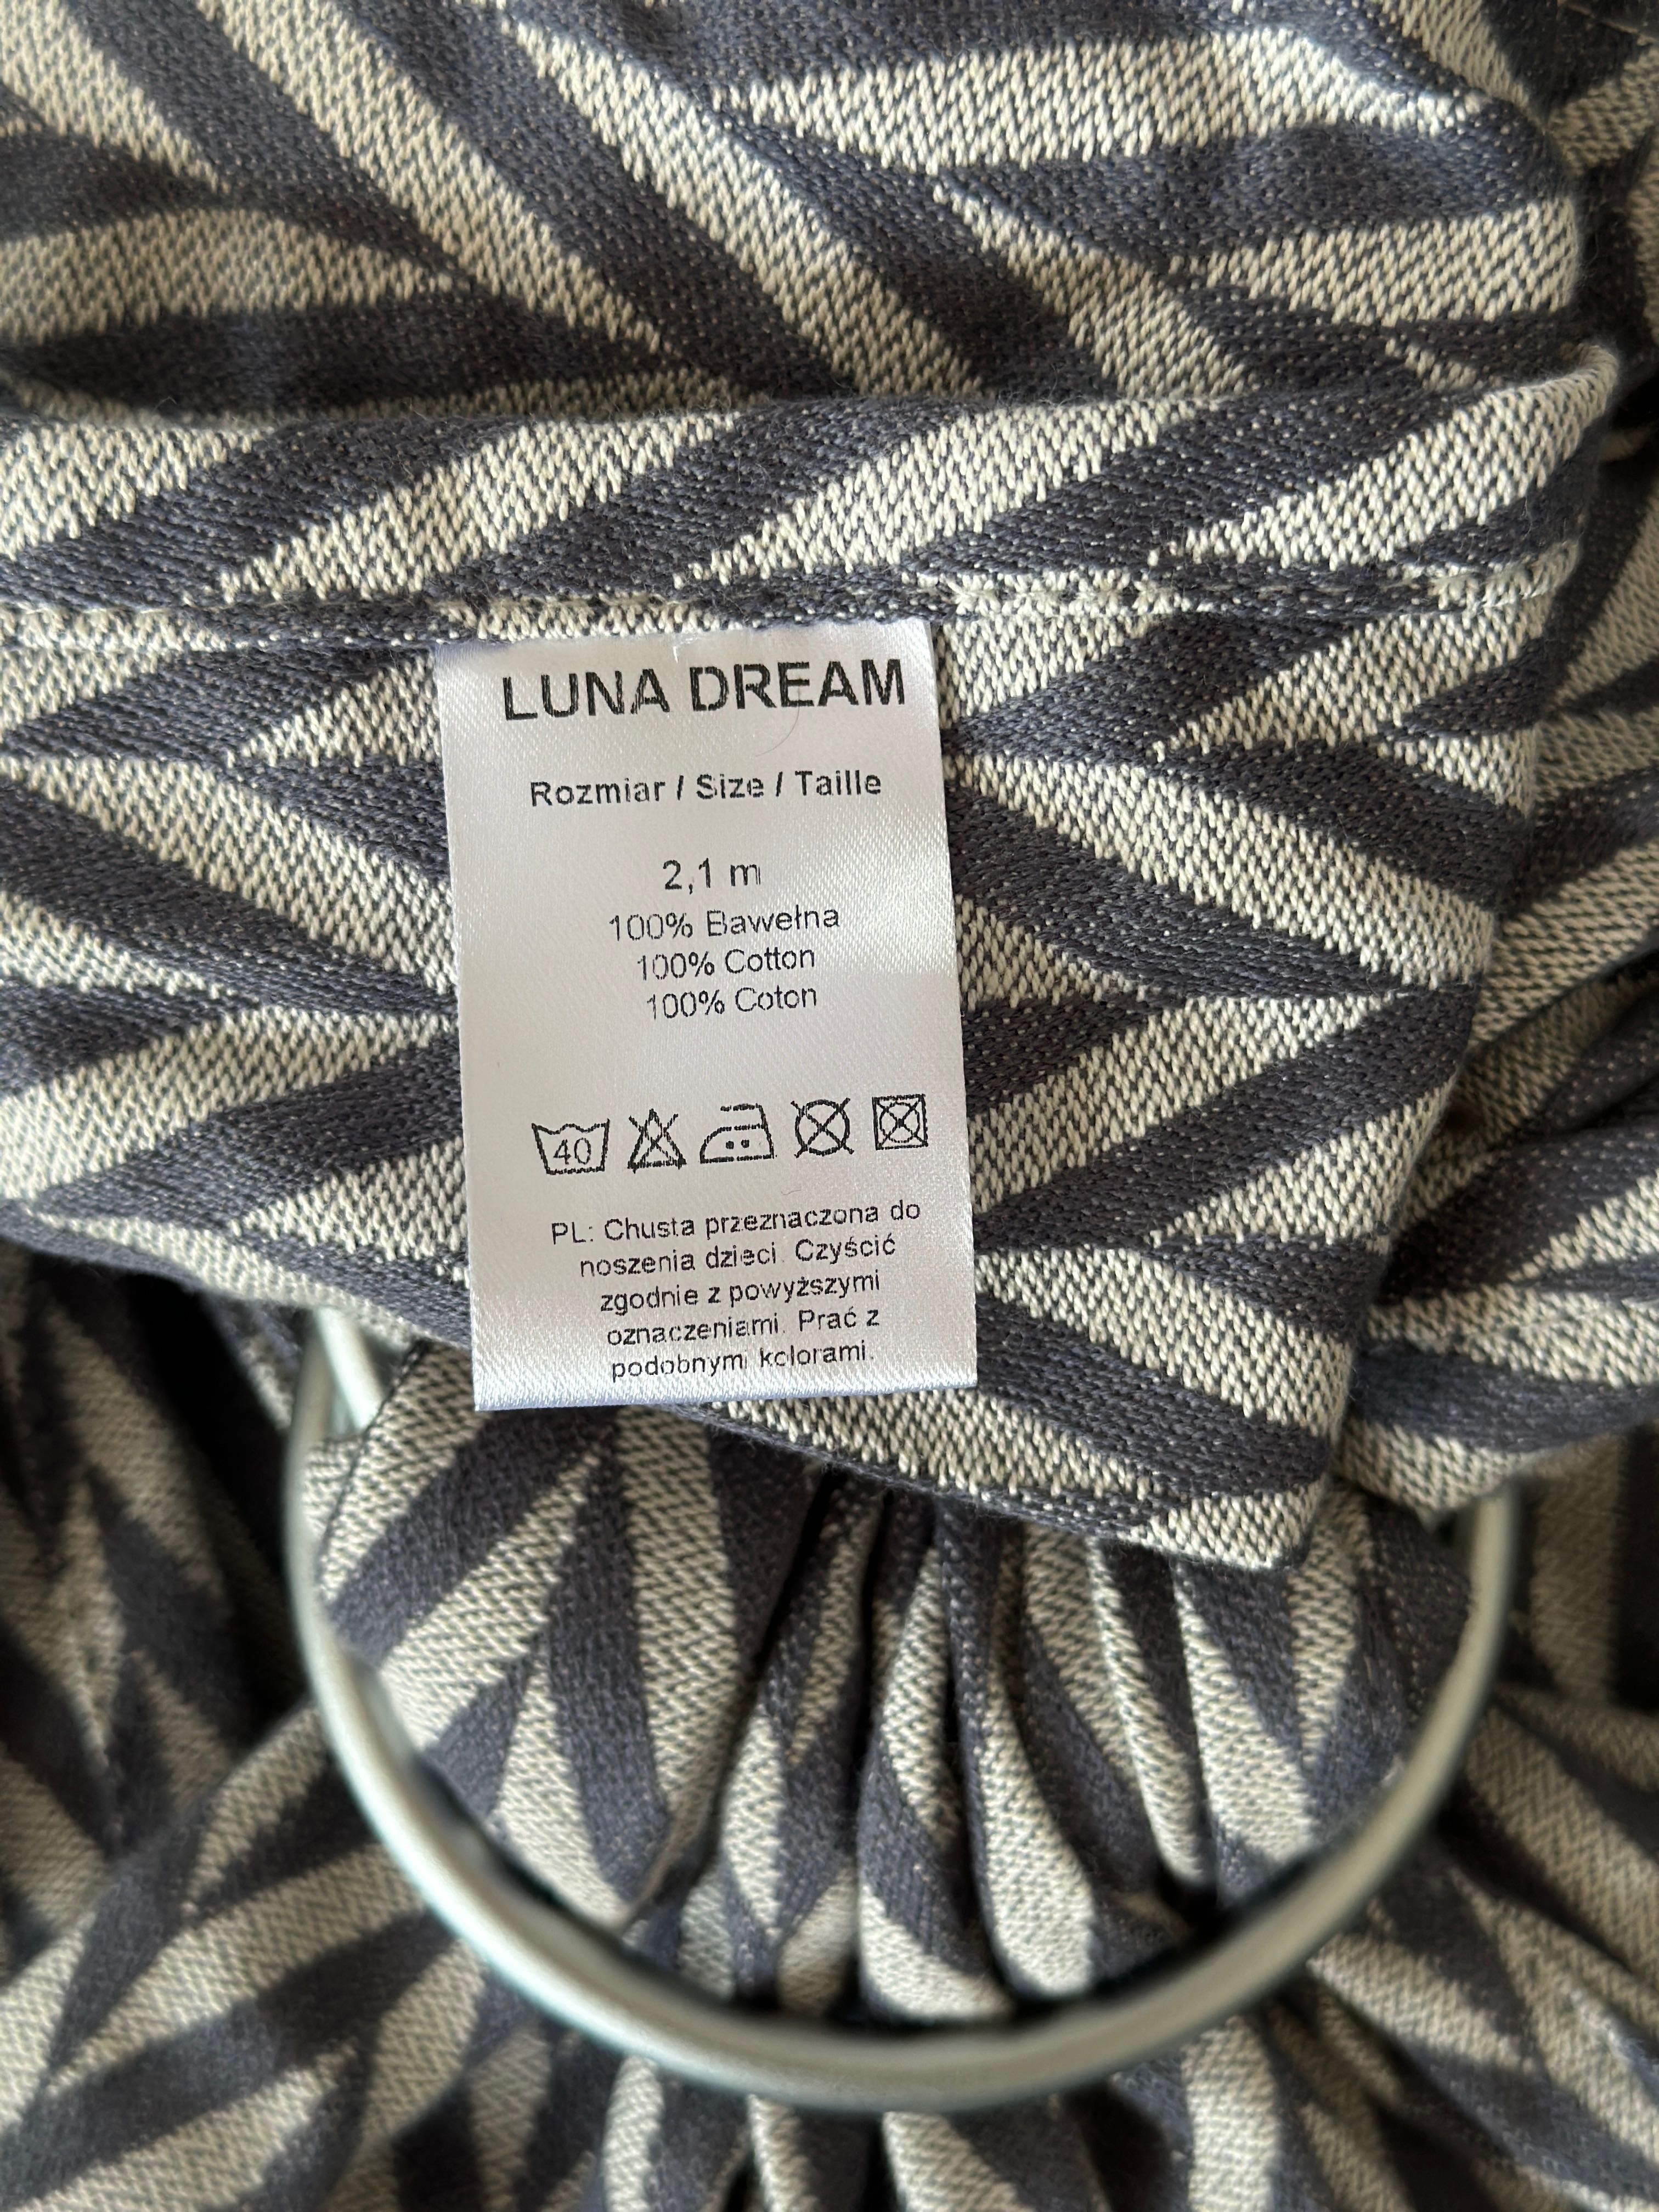 Chusta do noszenia dzieci Luna Dream 2,1 m